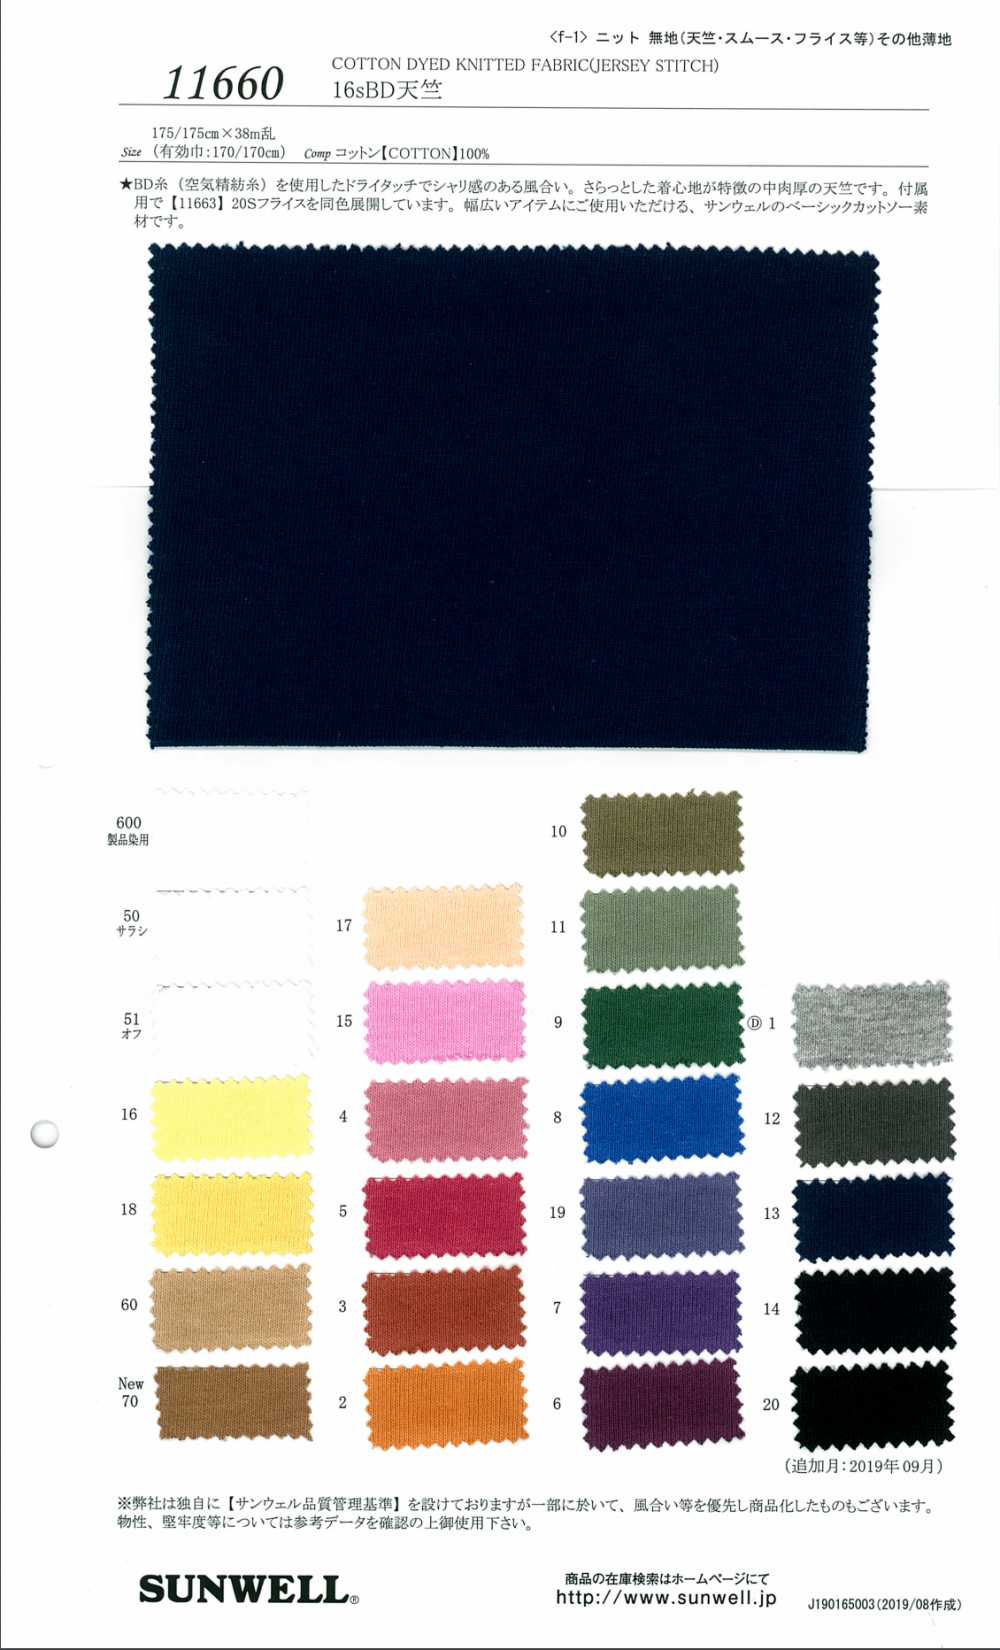 11660 Jersey De Algodón 16sBD[Fabrica Textil] SUNWELL